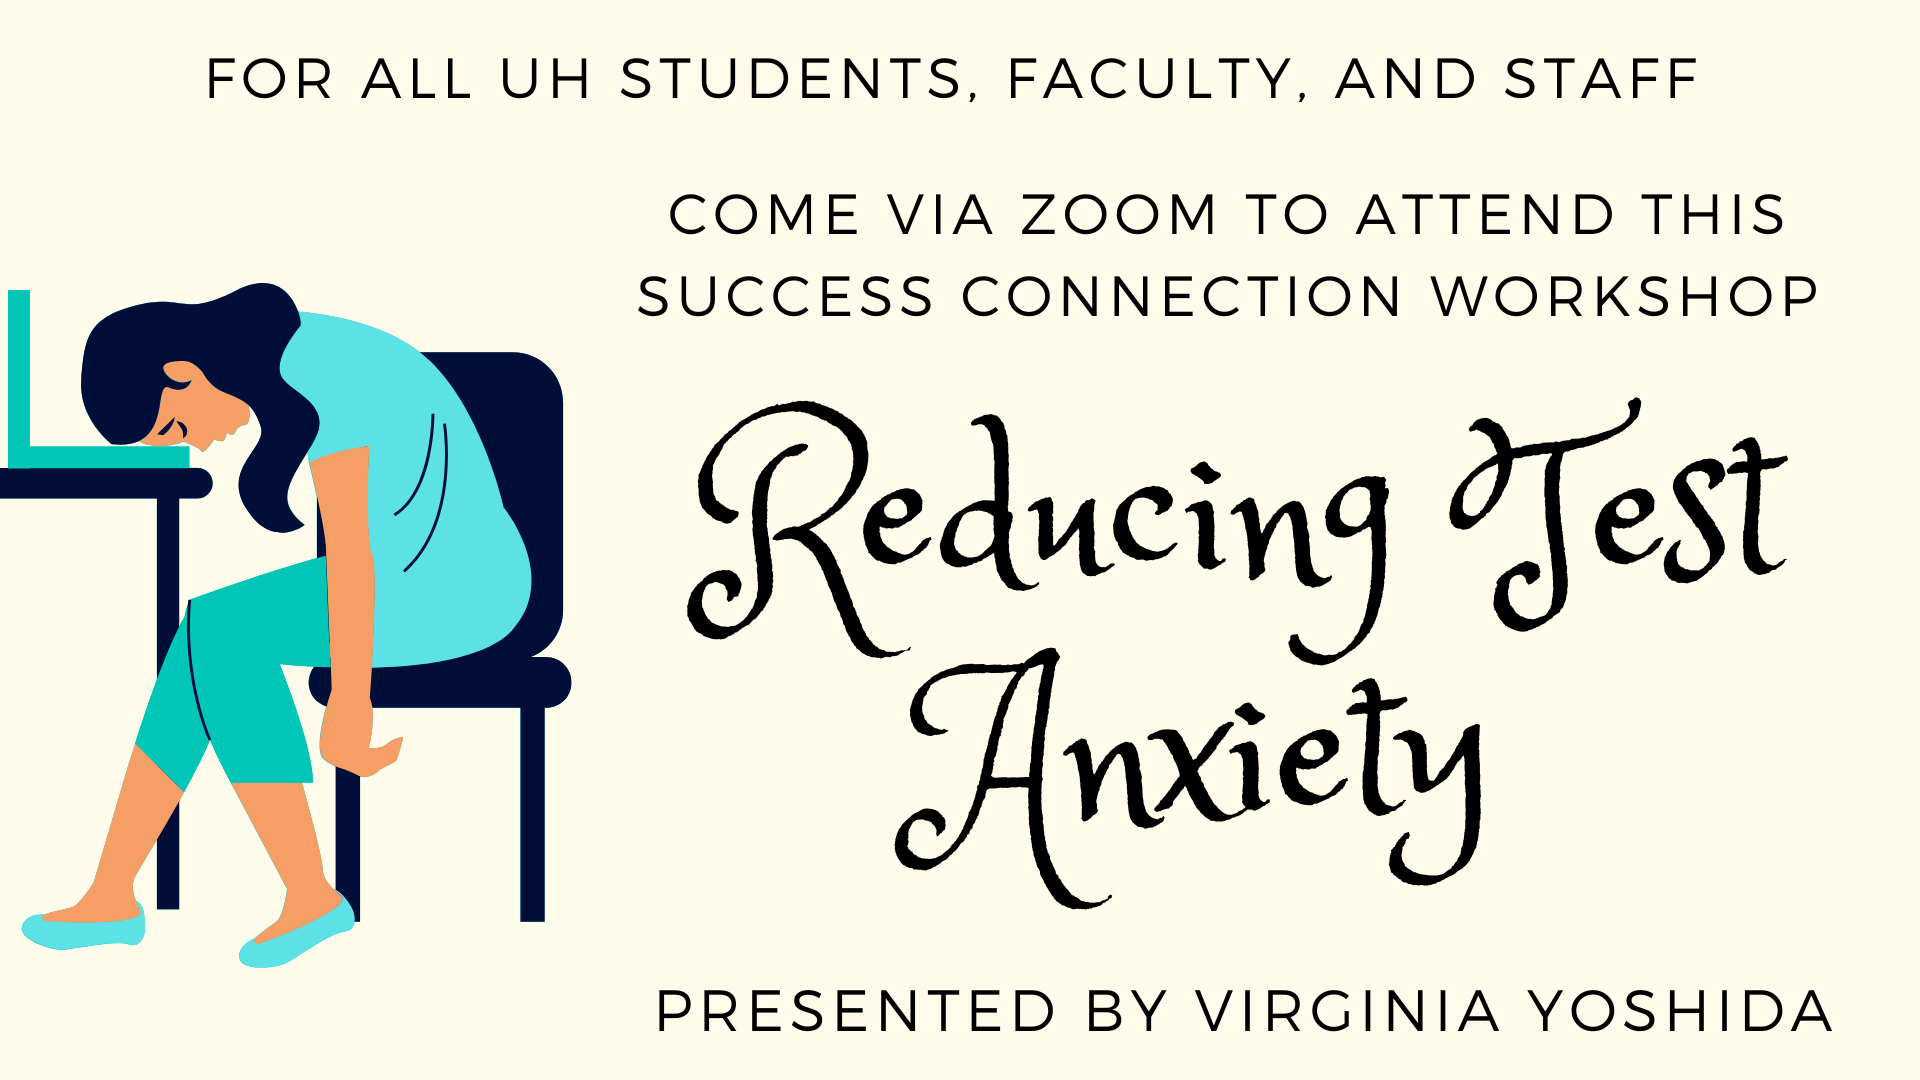 Reducing test anxiety - presented by Virginia Yoshida